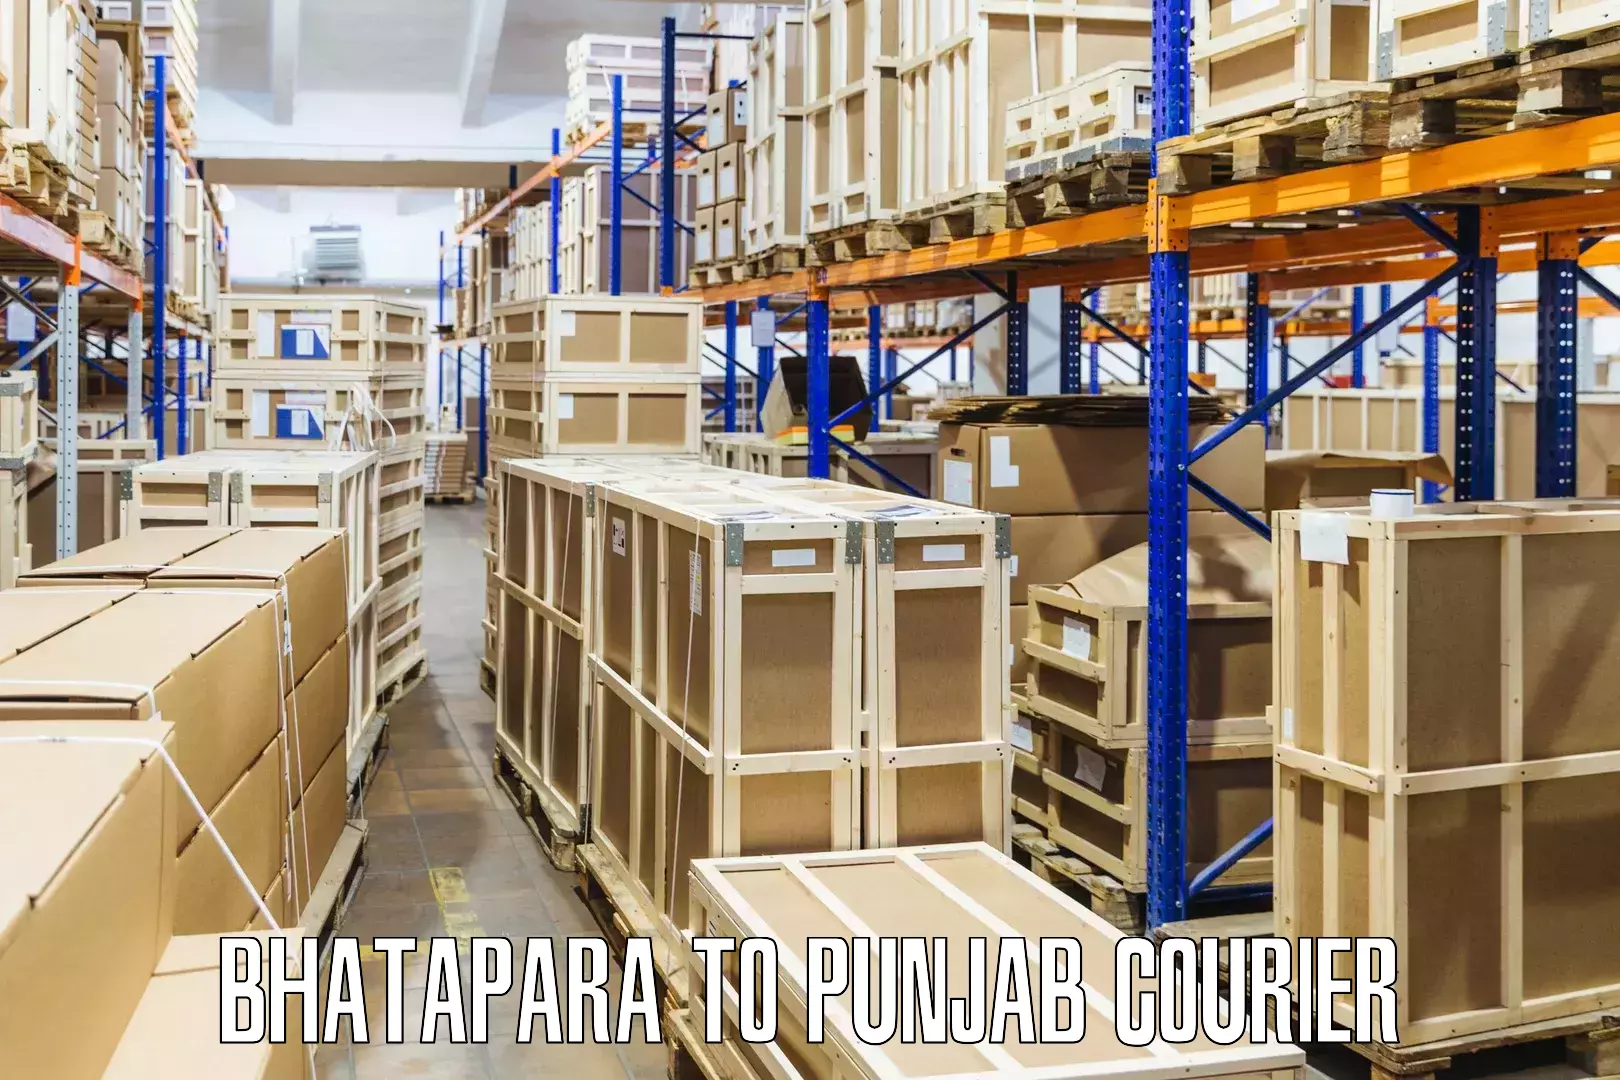 Urgent courier needs Bhatapara to Punjab